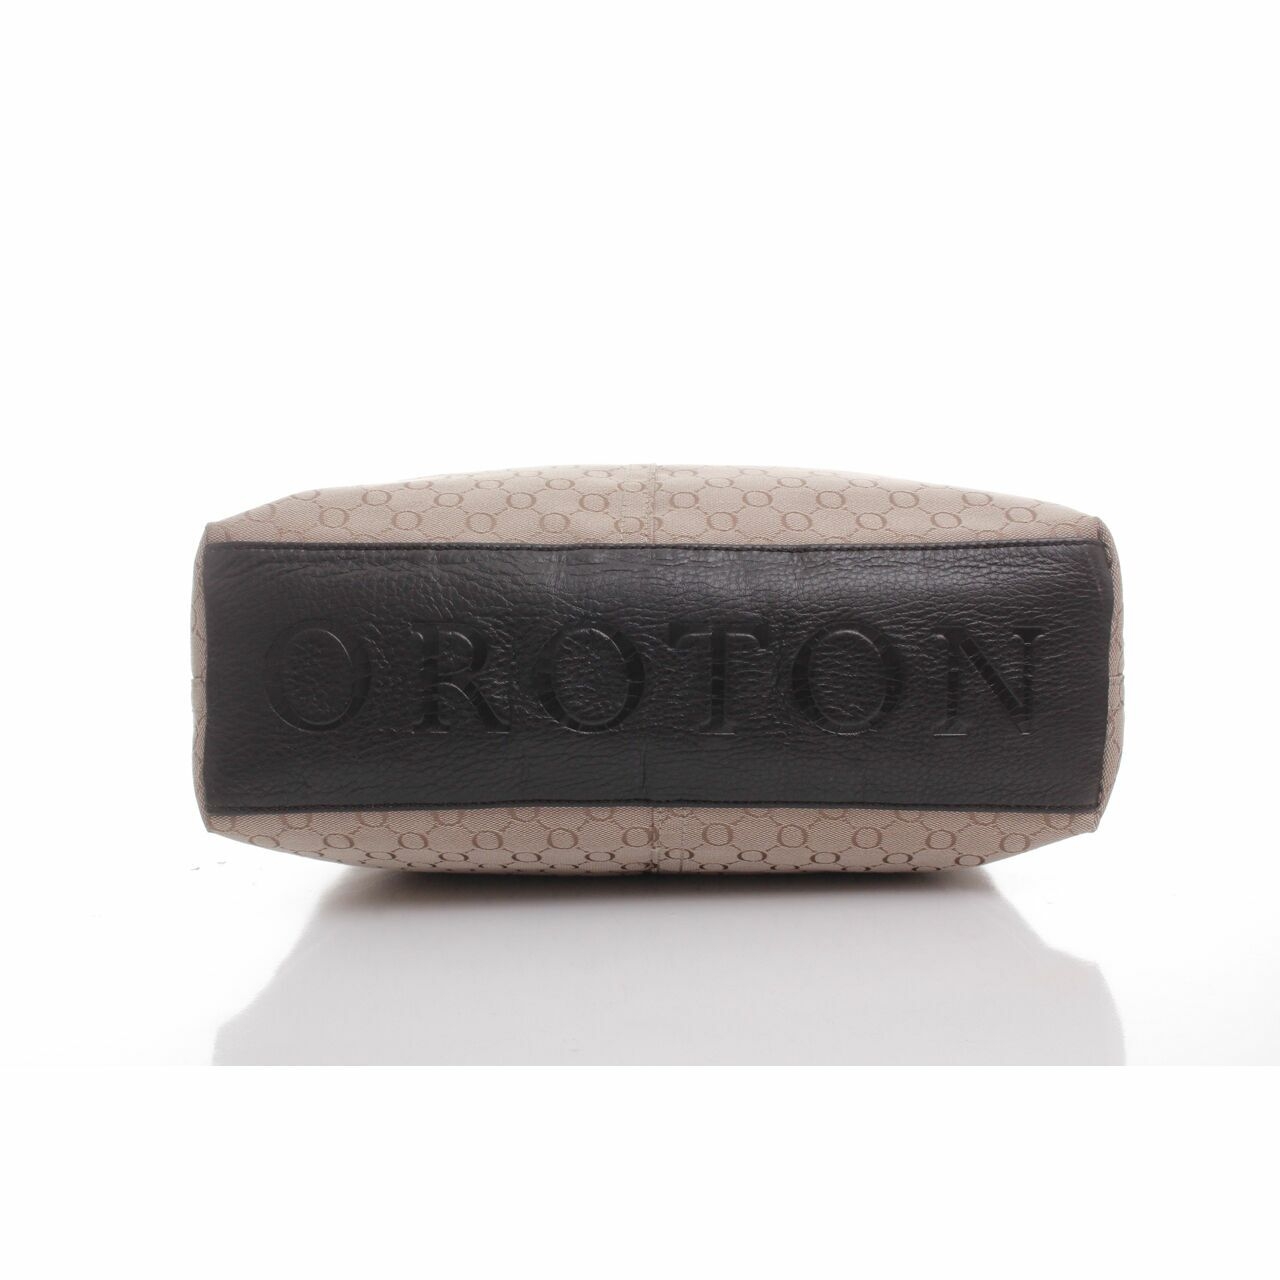 Oroton Brown Shoulder Bag